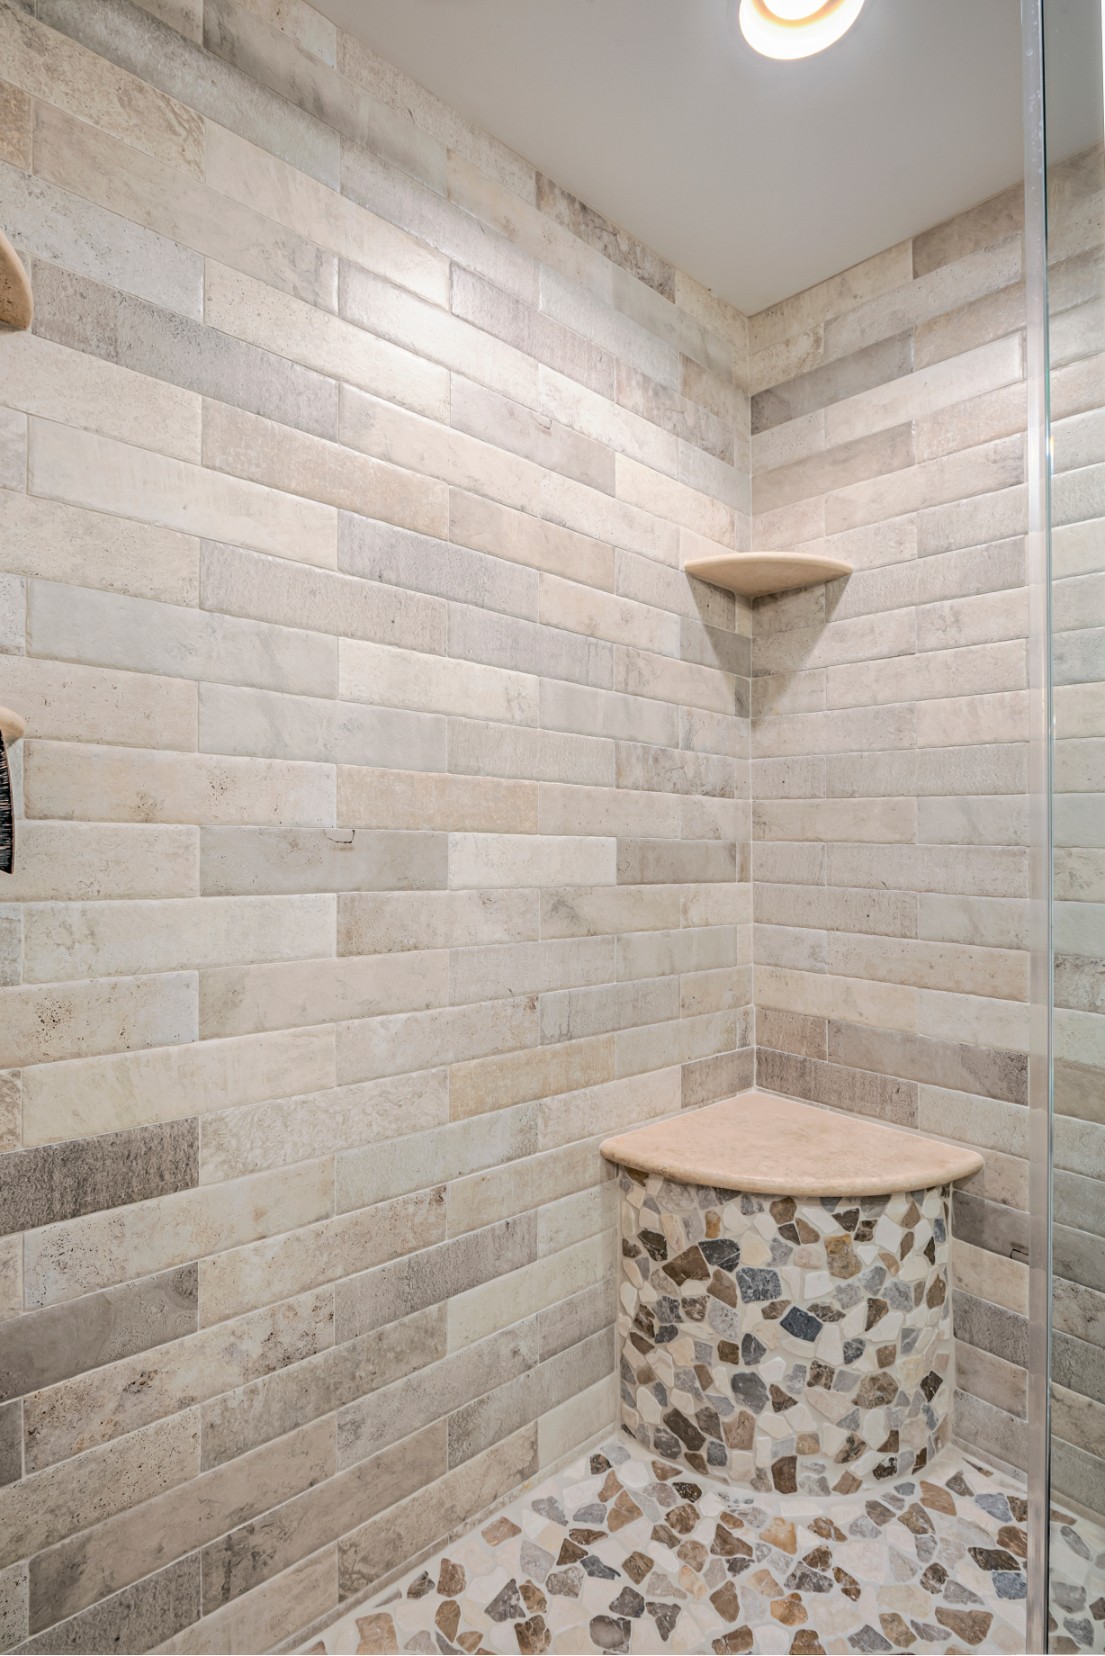 Burton Farm Road Bathroom Remodel in Frankford DE - Shower Tiles and Corner Bench Seat